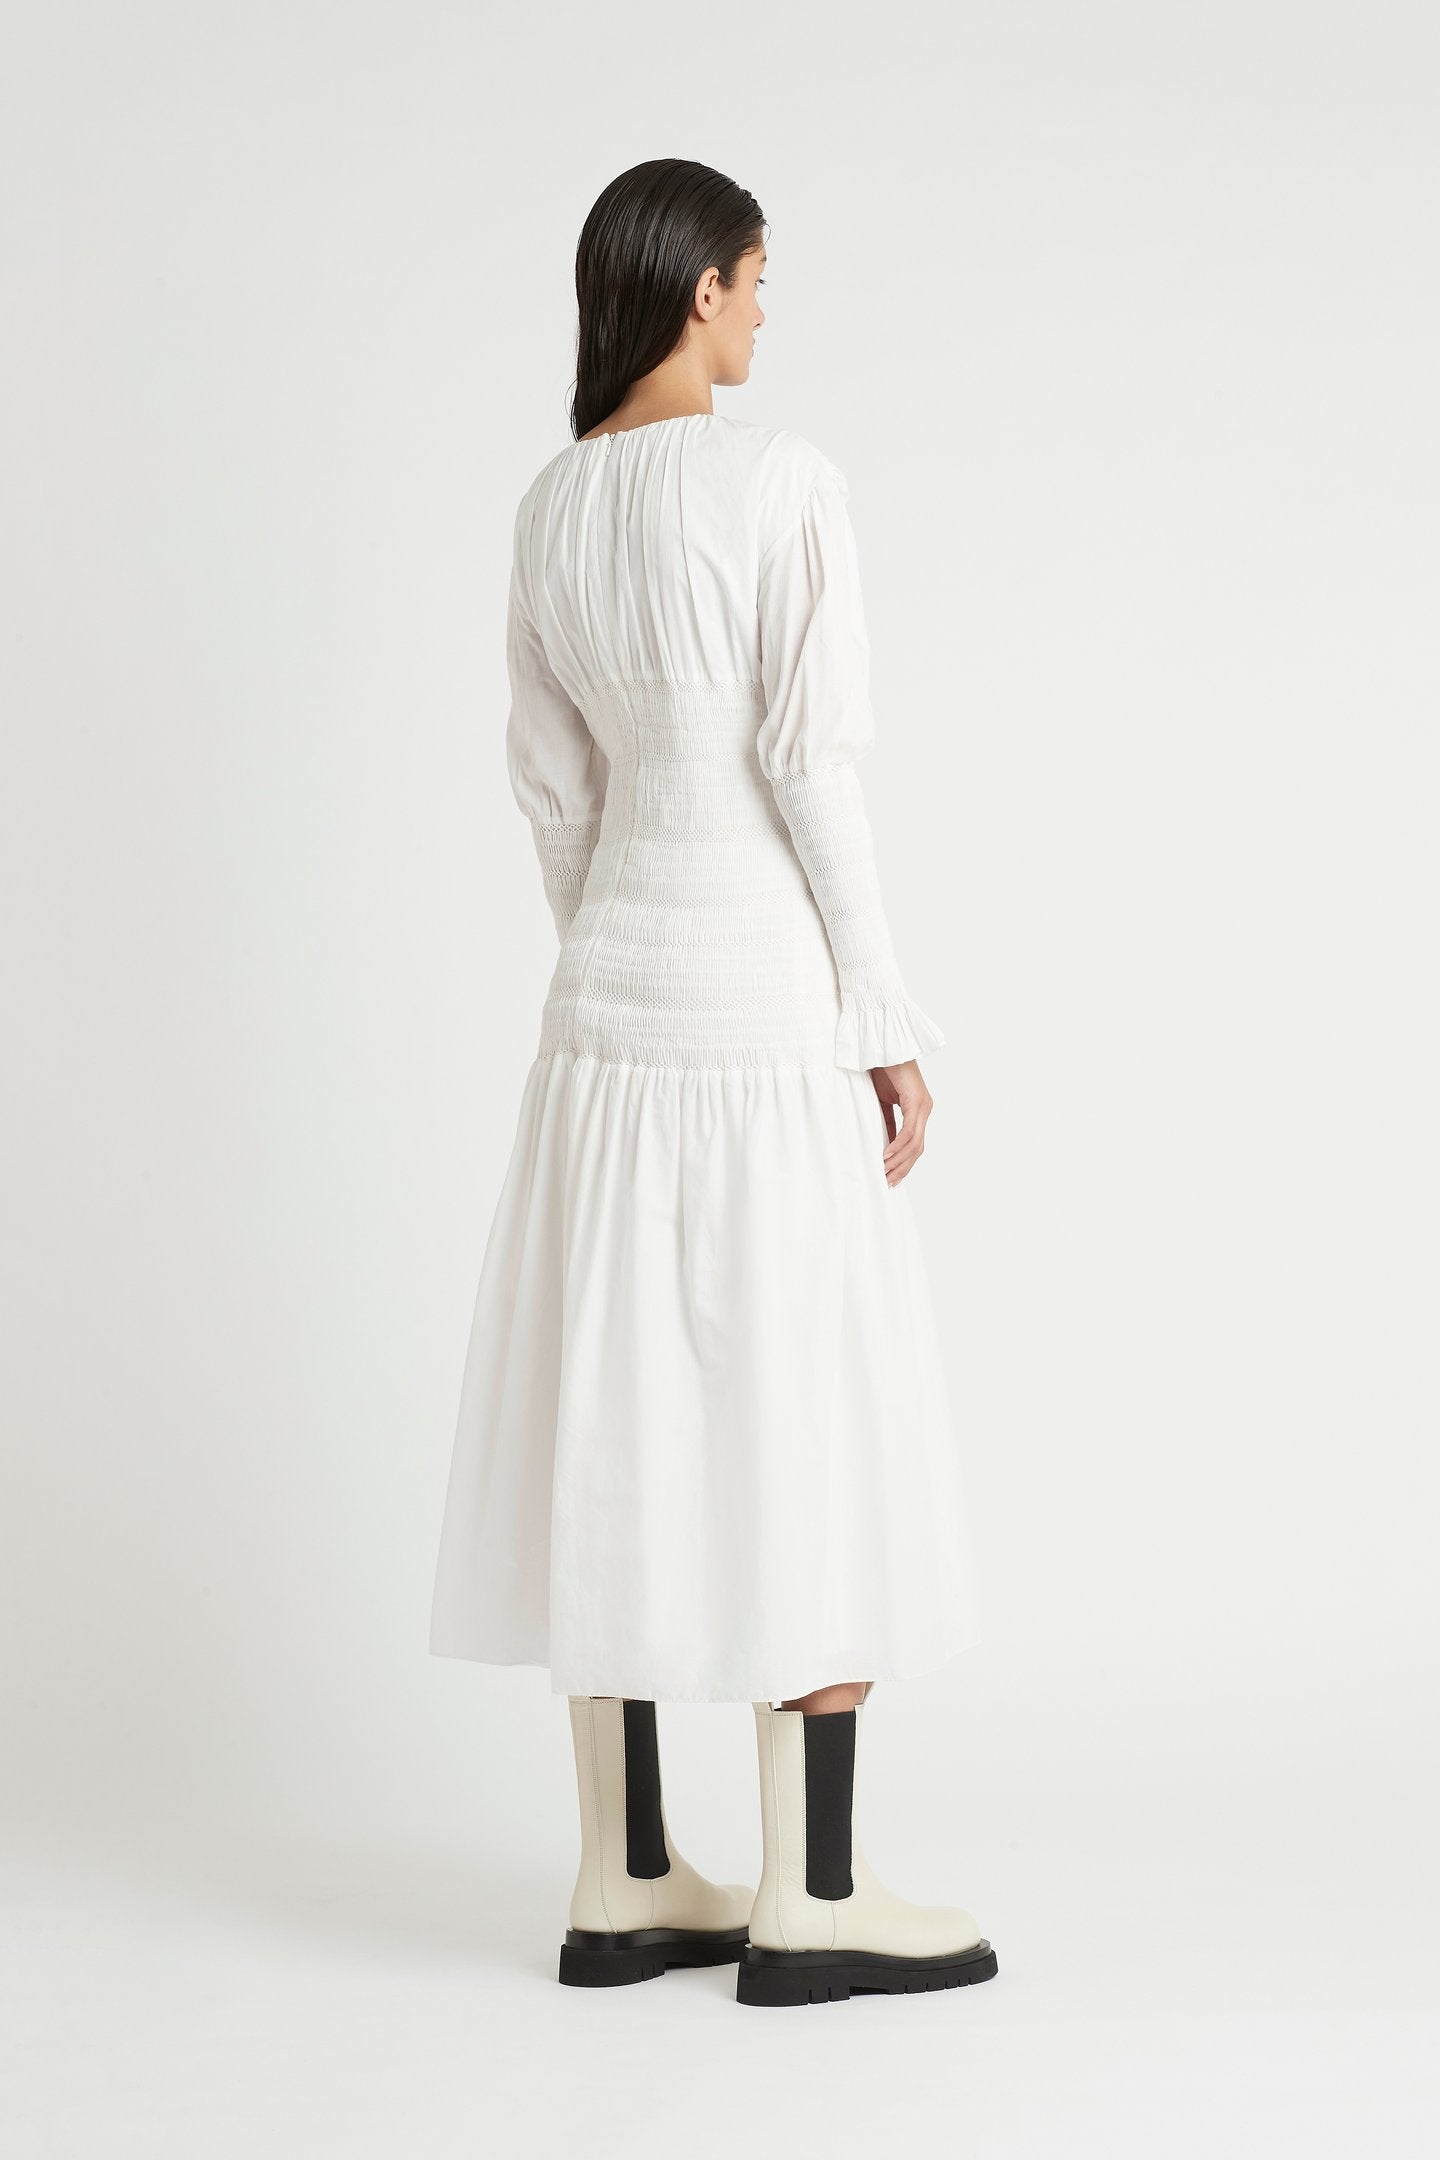 SIR - Cecil Long Sleeve Midi Dress, White